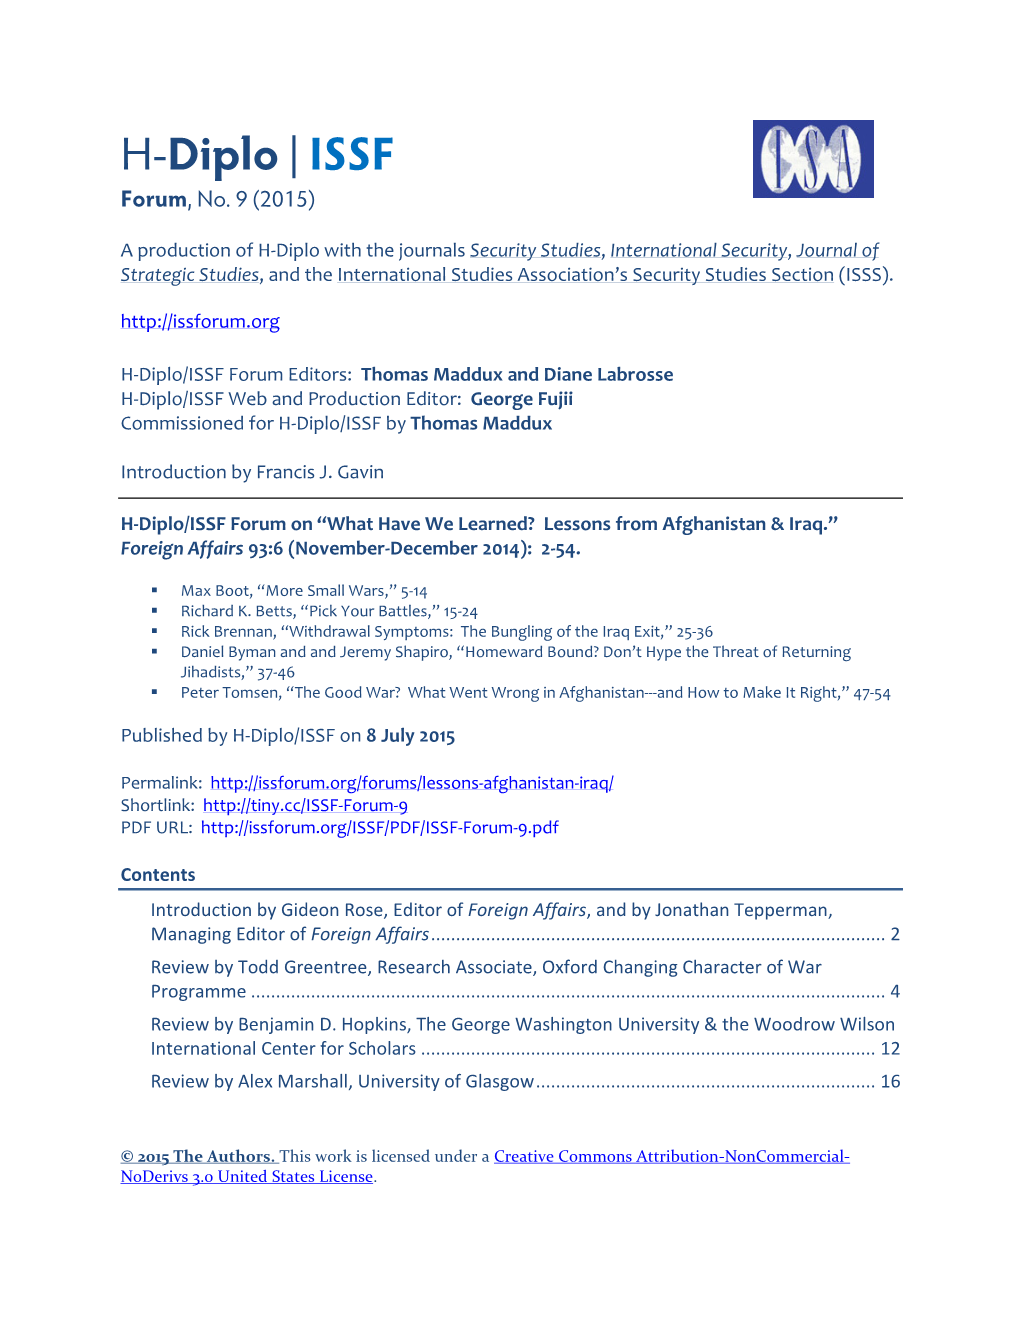 H-Diplo/ISSF Forum, No. 9 (2015)